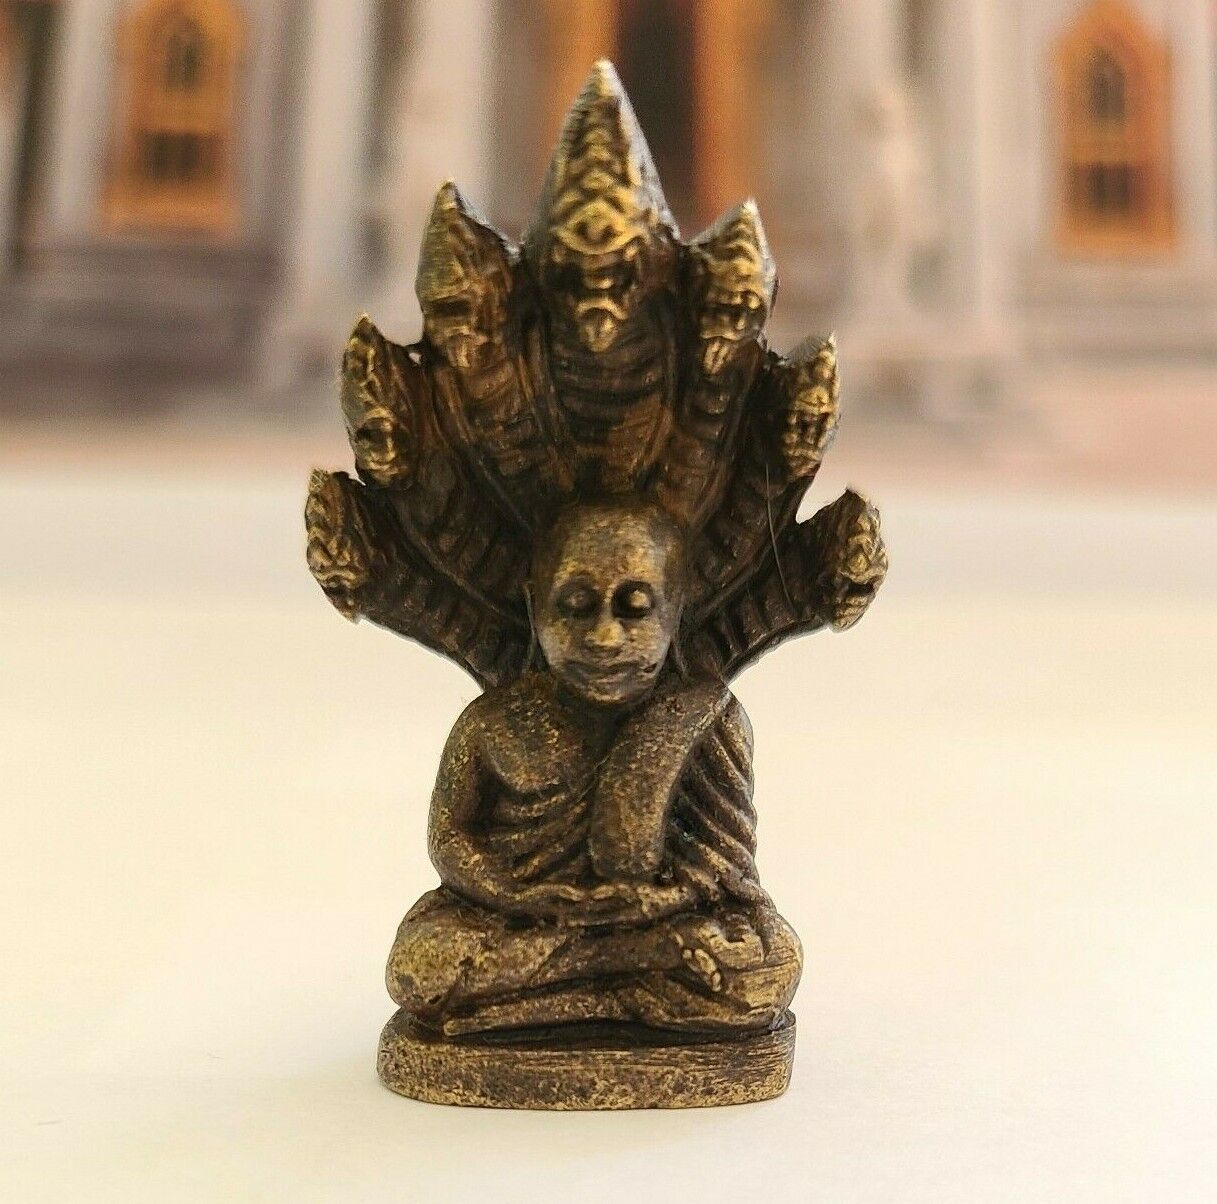 Thai Buddha Amulet Lp Ngern (Money) Nak Prok Statue Monk Brass Protect Luck Weal